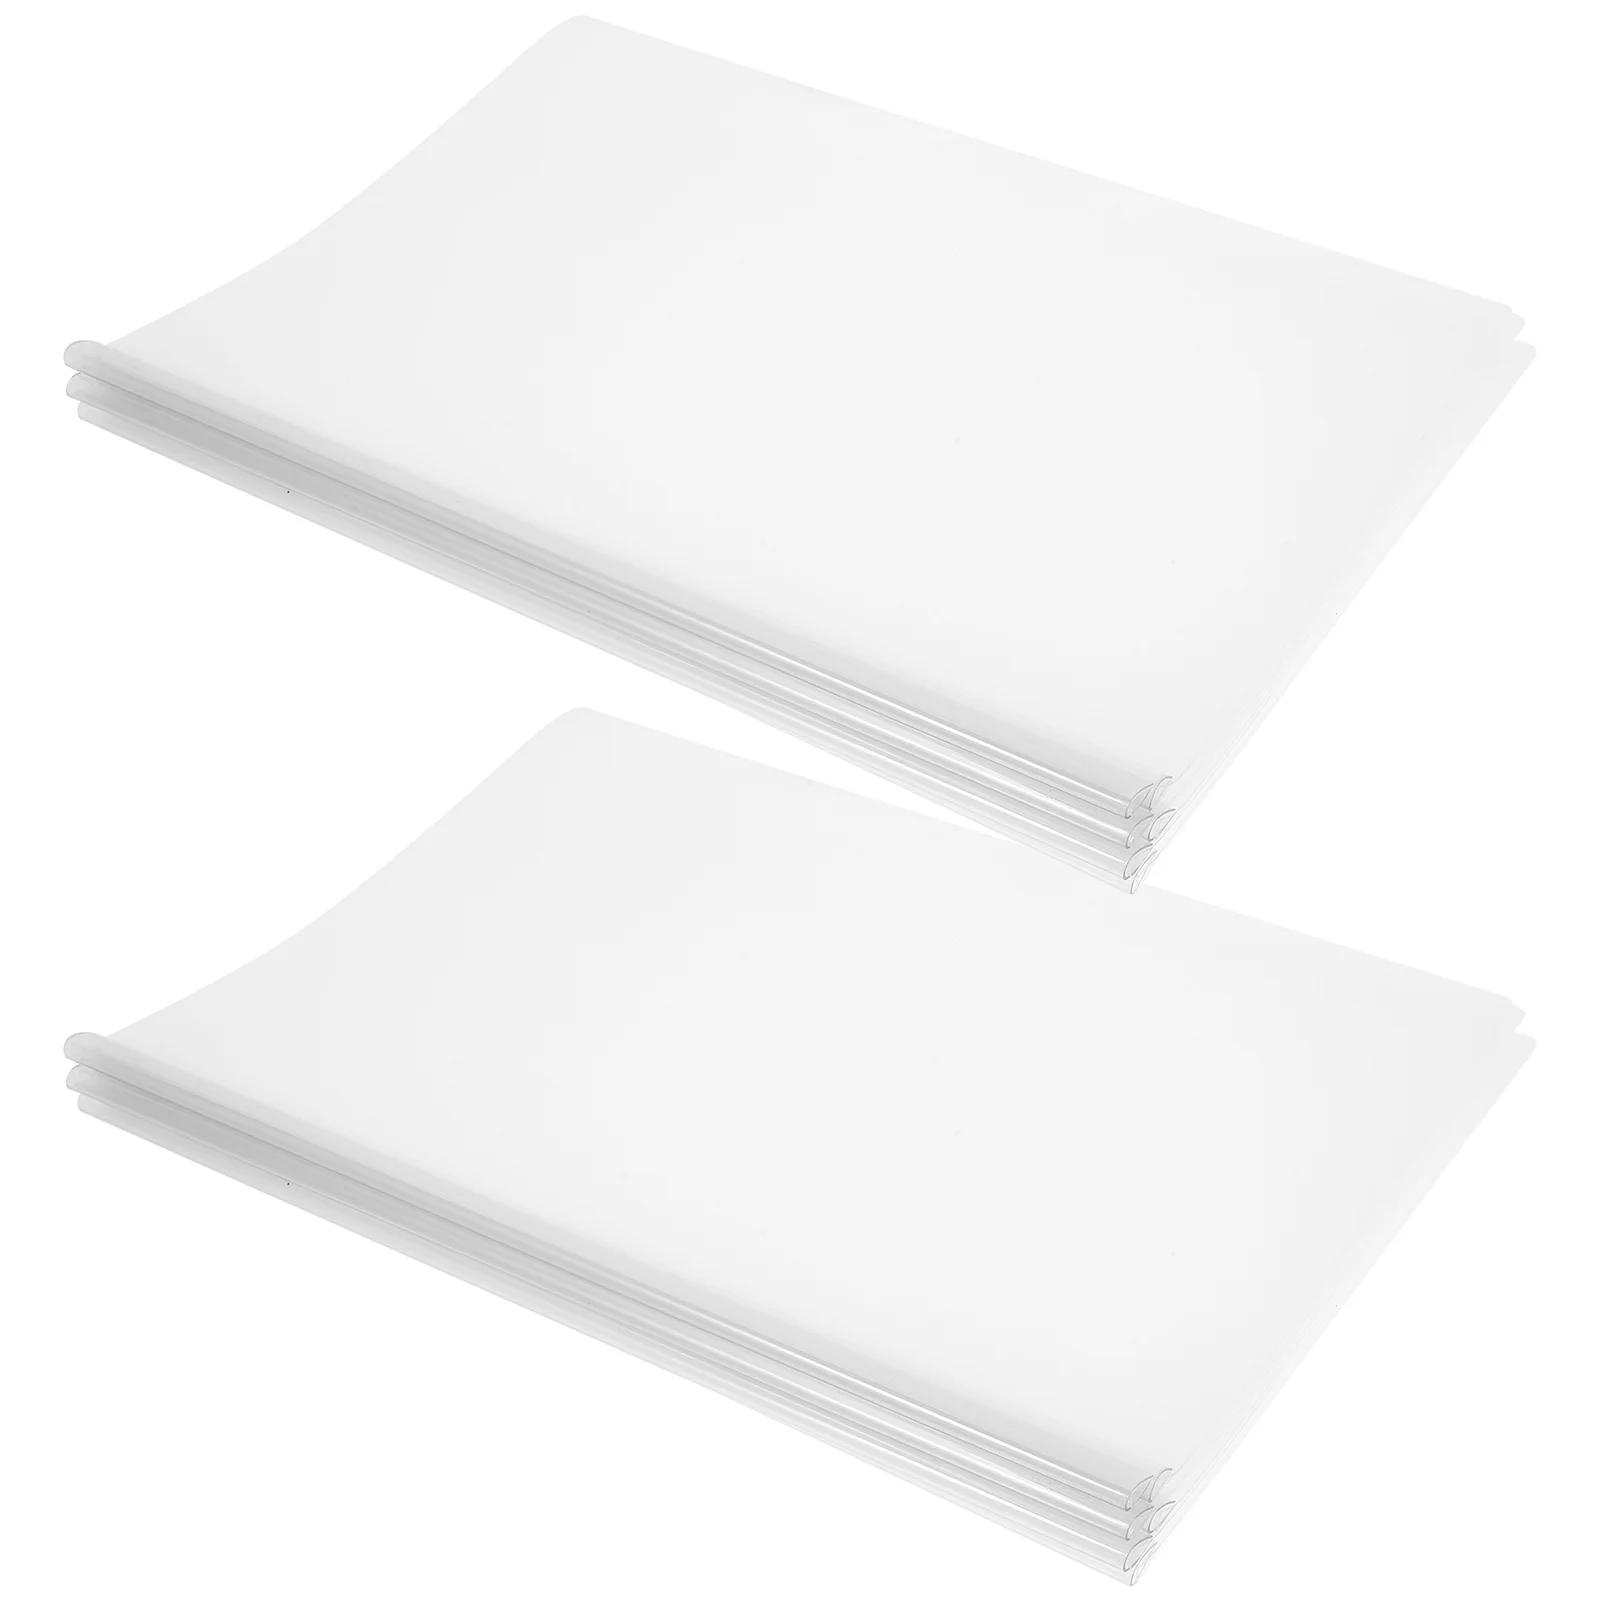 

10 Pcs Clear Binder Presentation Folders Report Covers Sliding Bar Clip Documents Plastic Portfolio Paper